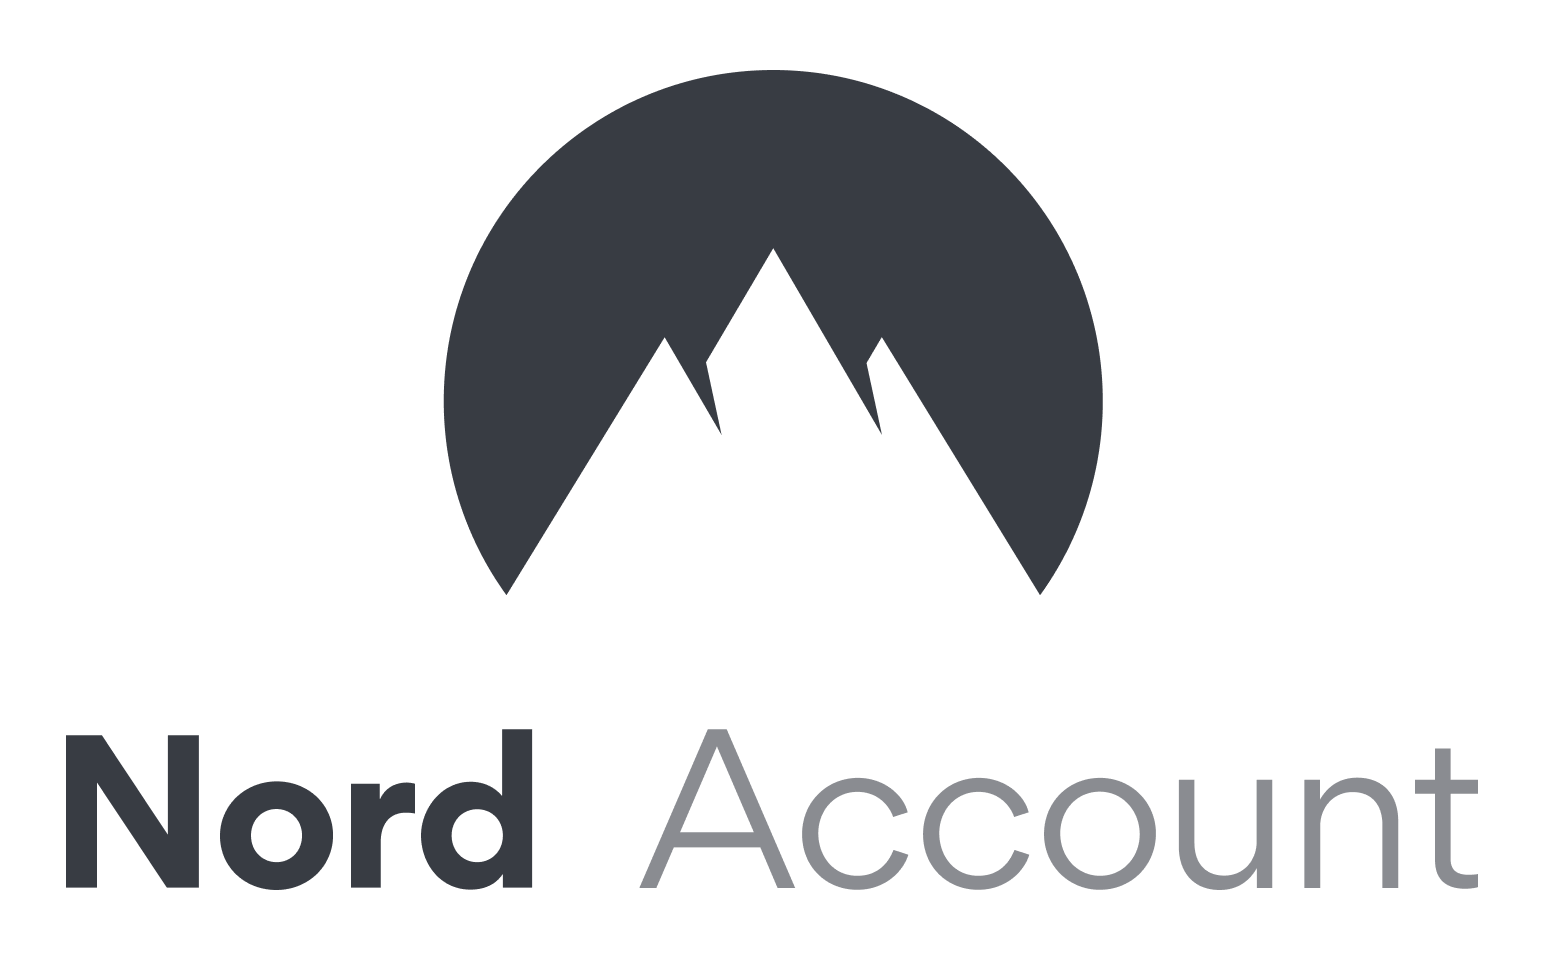 Nord Account logo